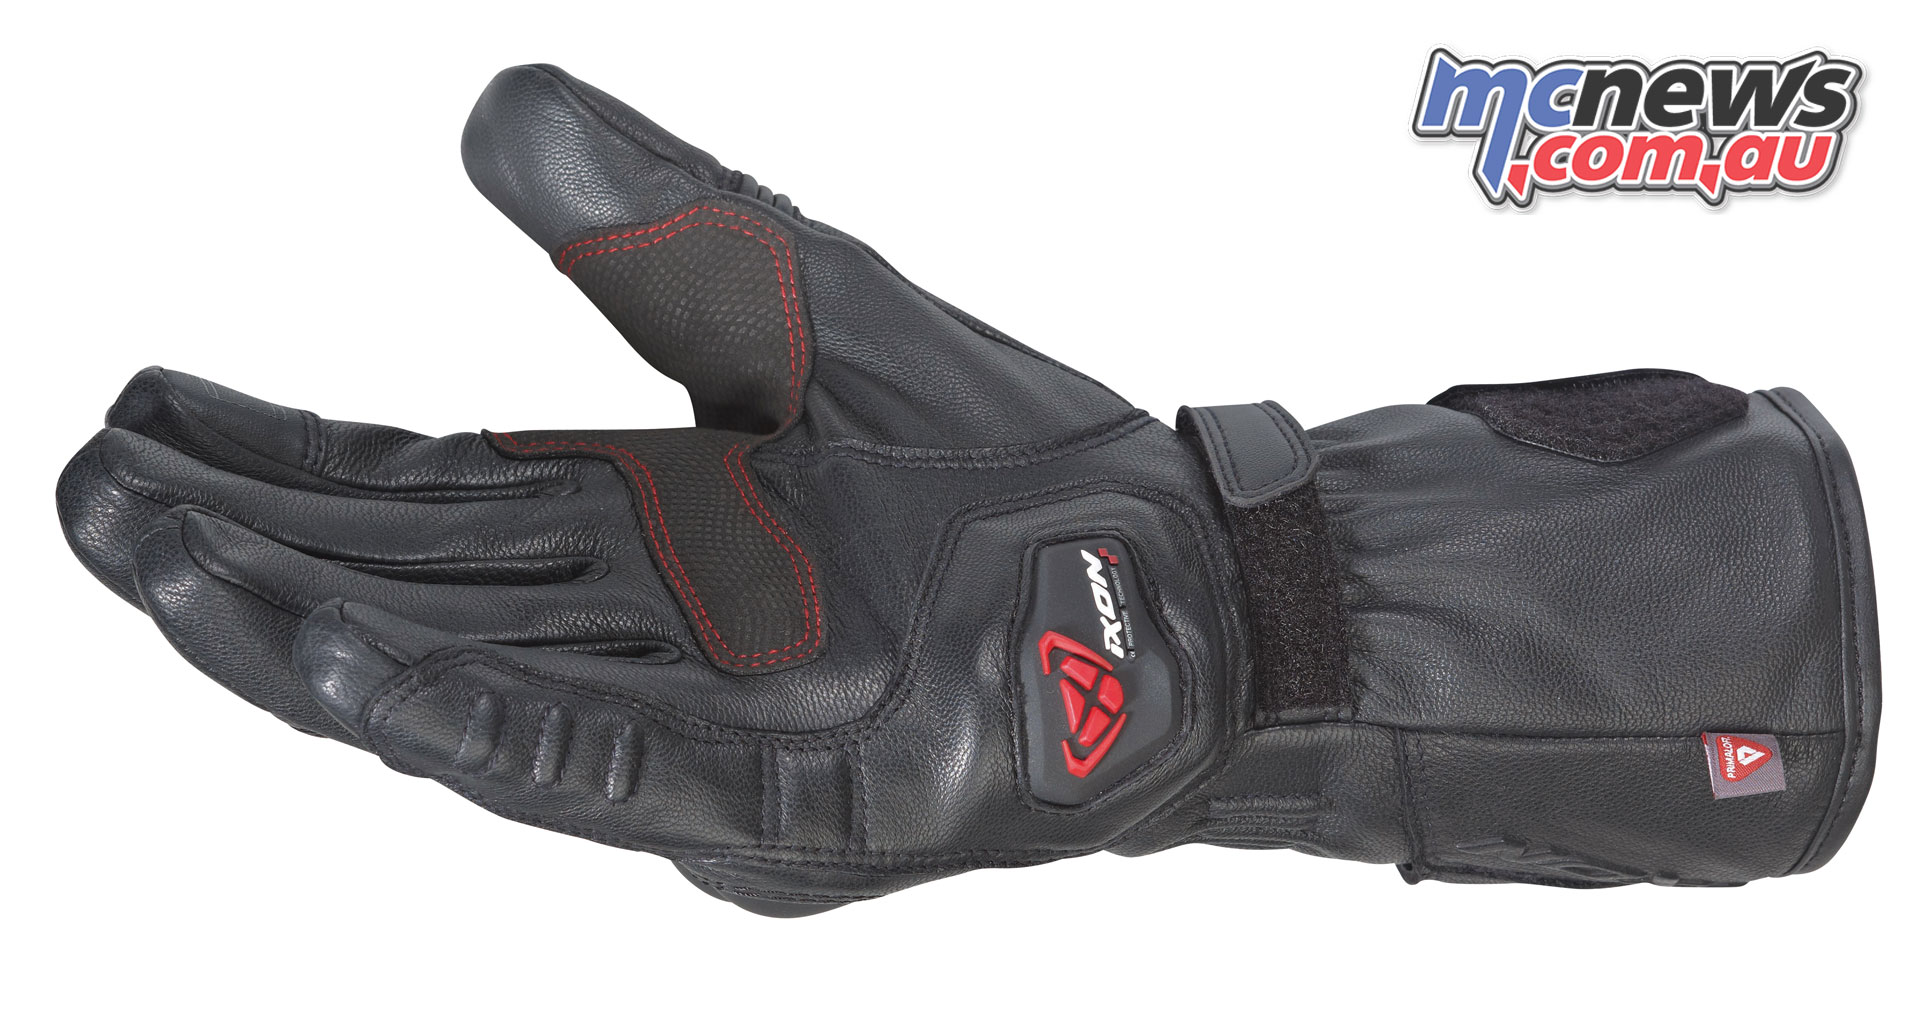 Ixon Winter Glove pro continental noir cote